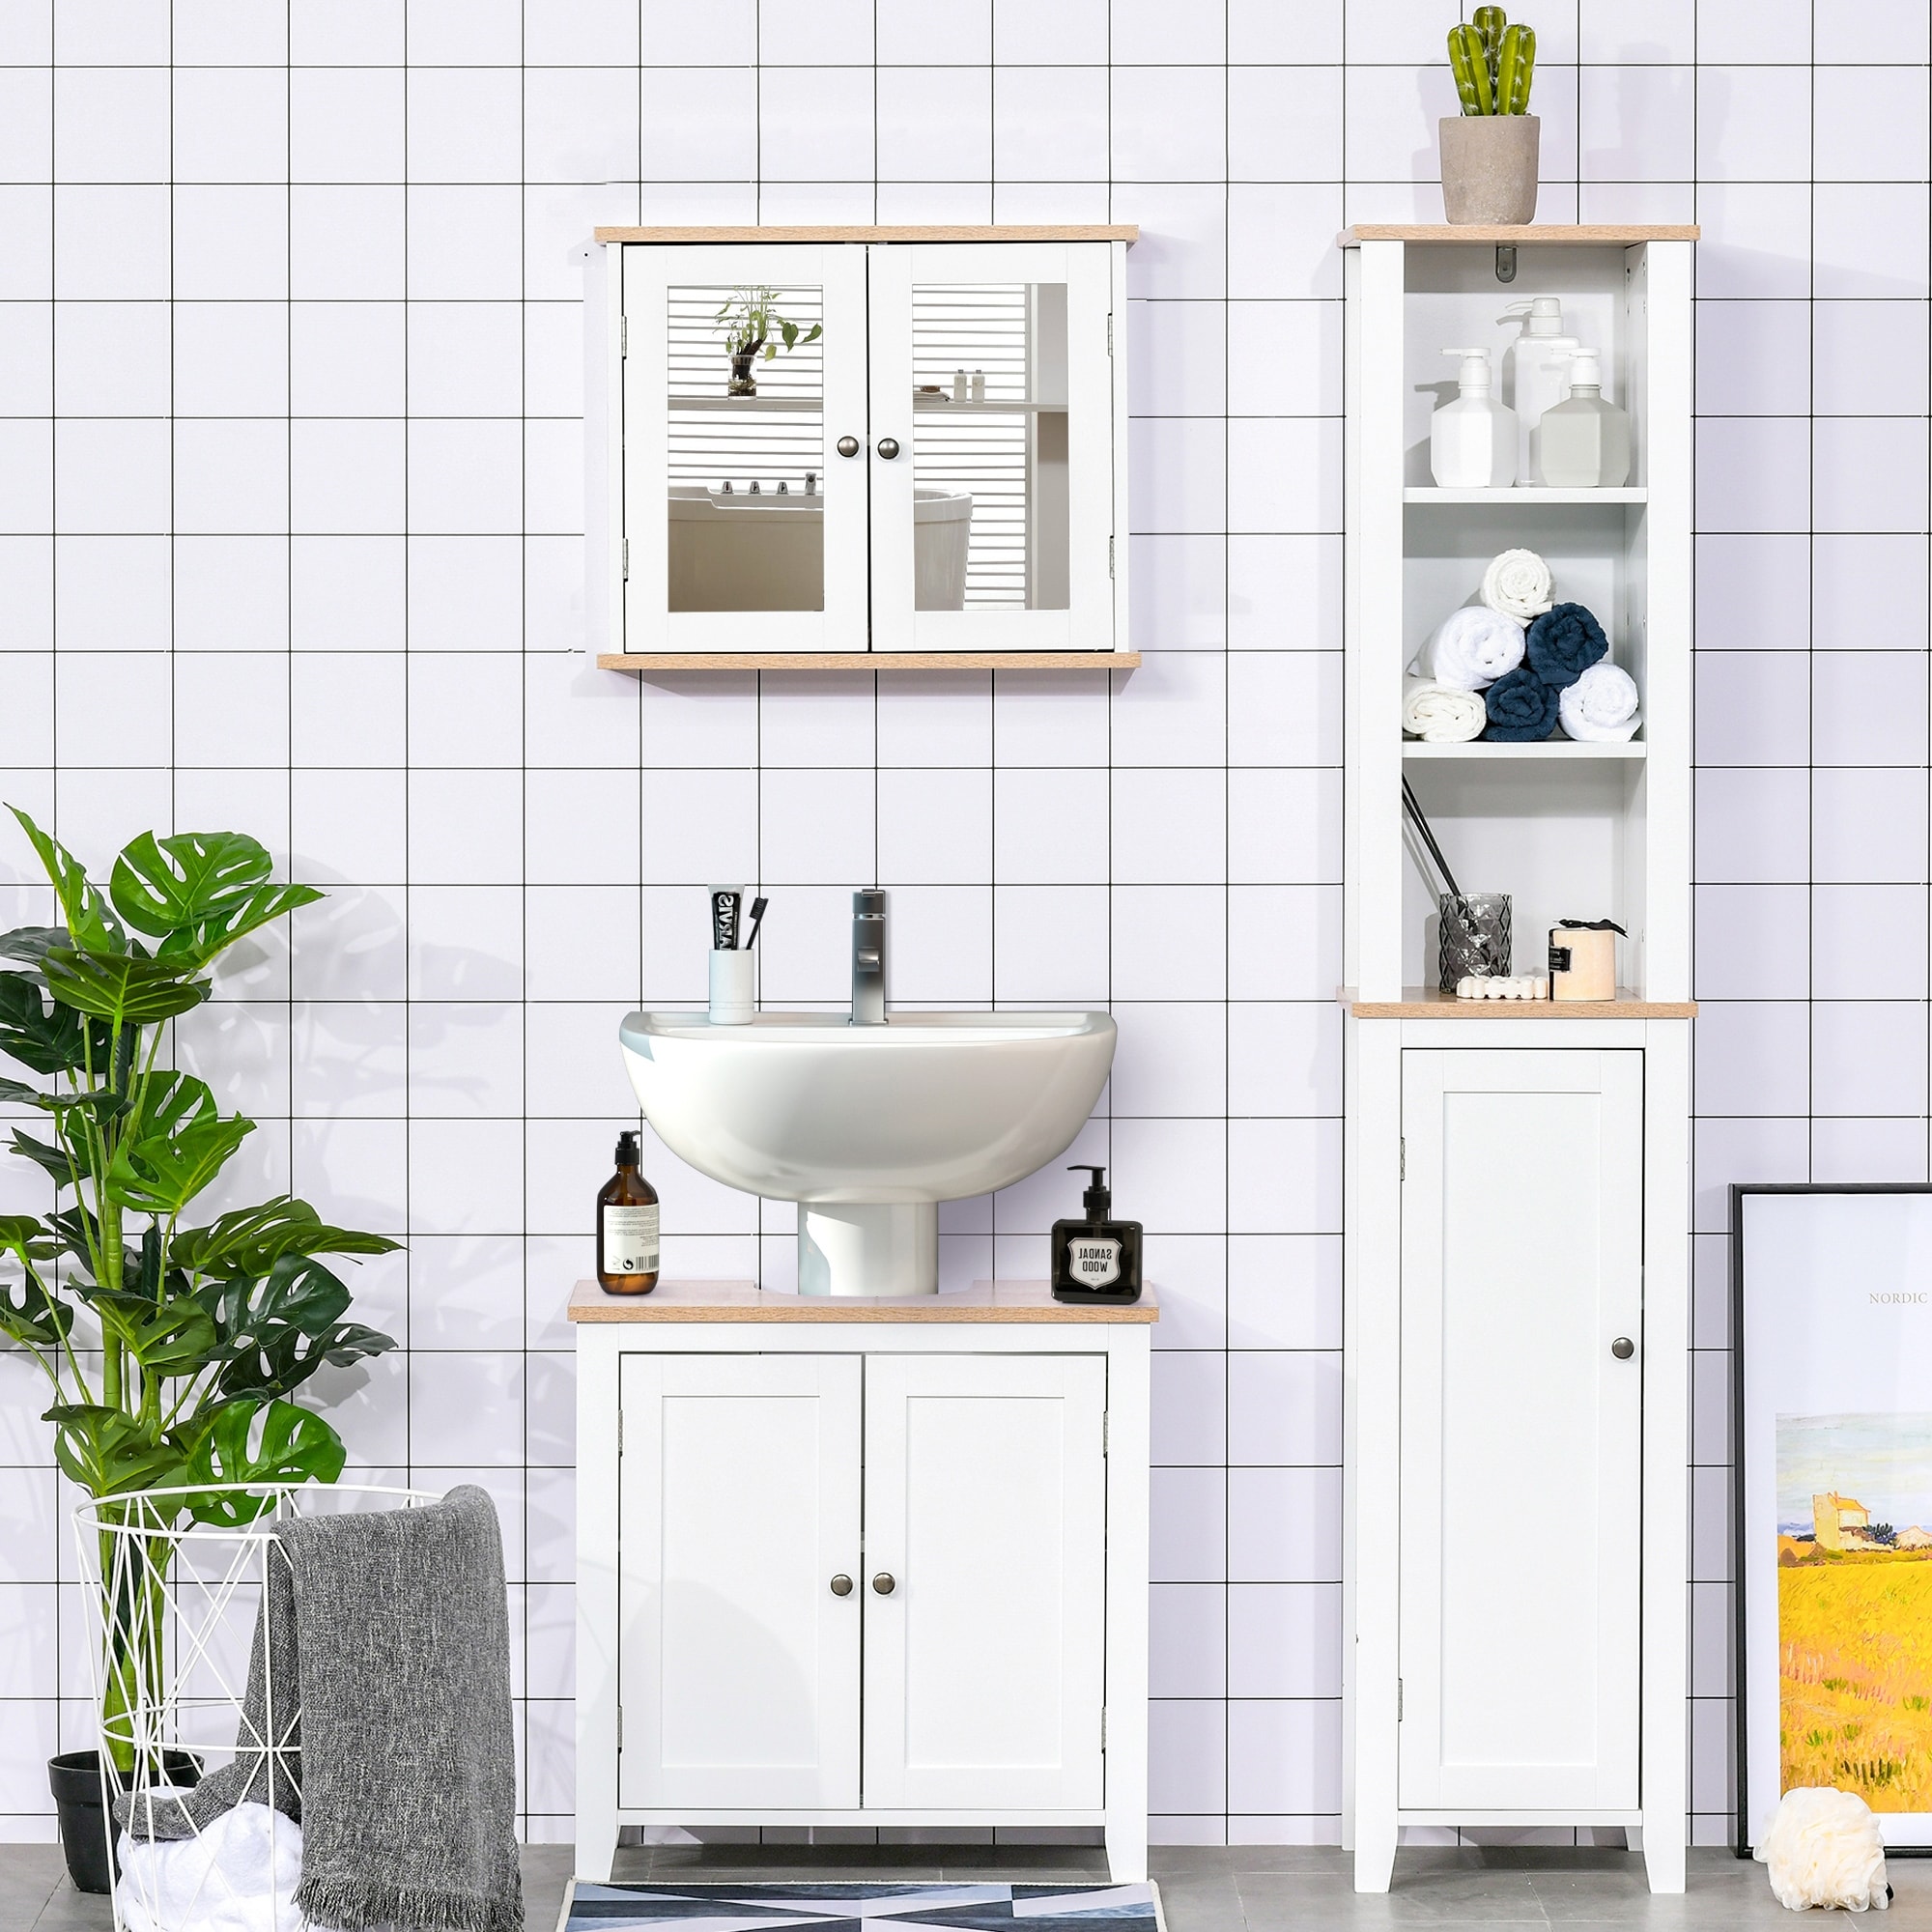 kleankin Vanity Base Cabinet, Under-Sink Bathroom Cabinet Storage with  U-Shape Cut-Out and Adjustable